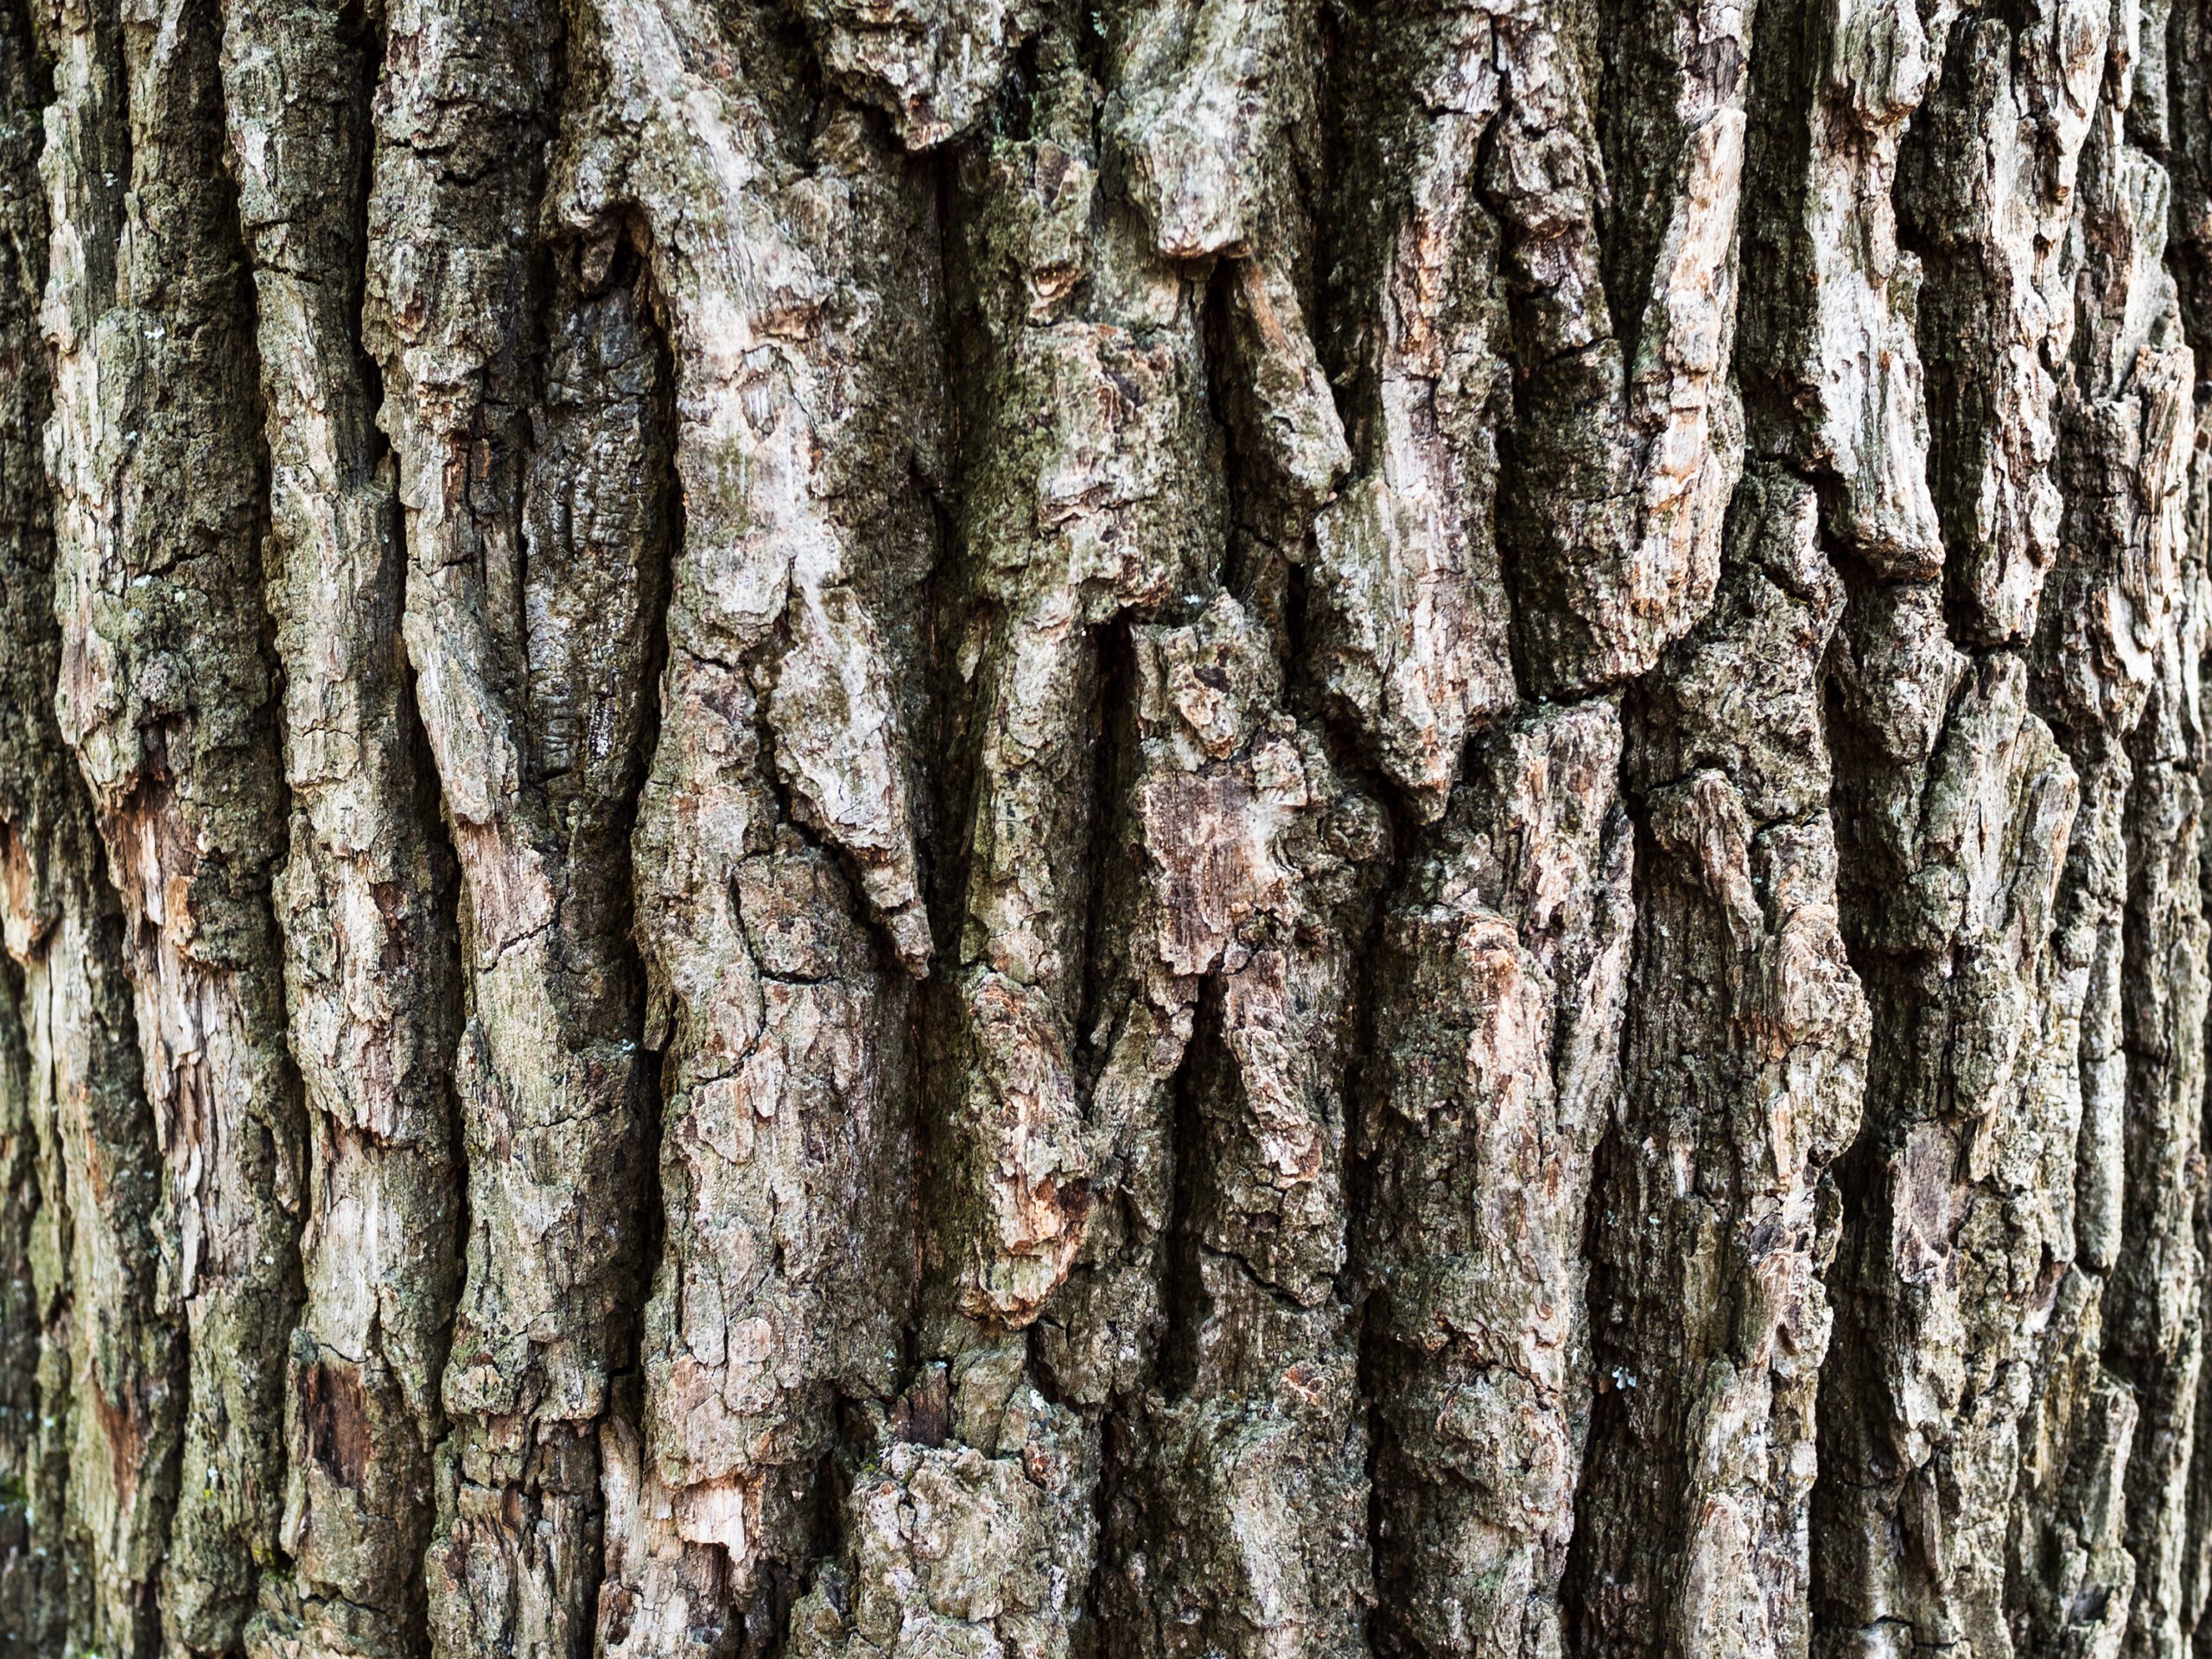 Quercus robur tree bark